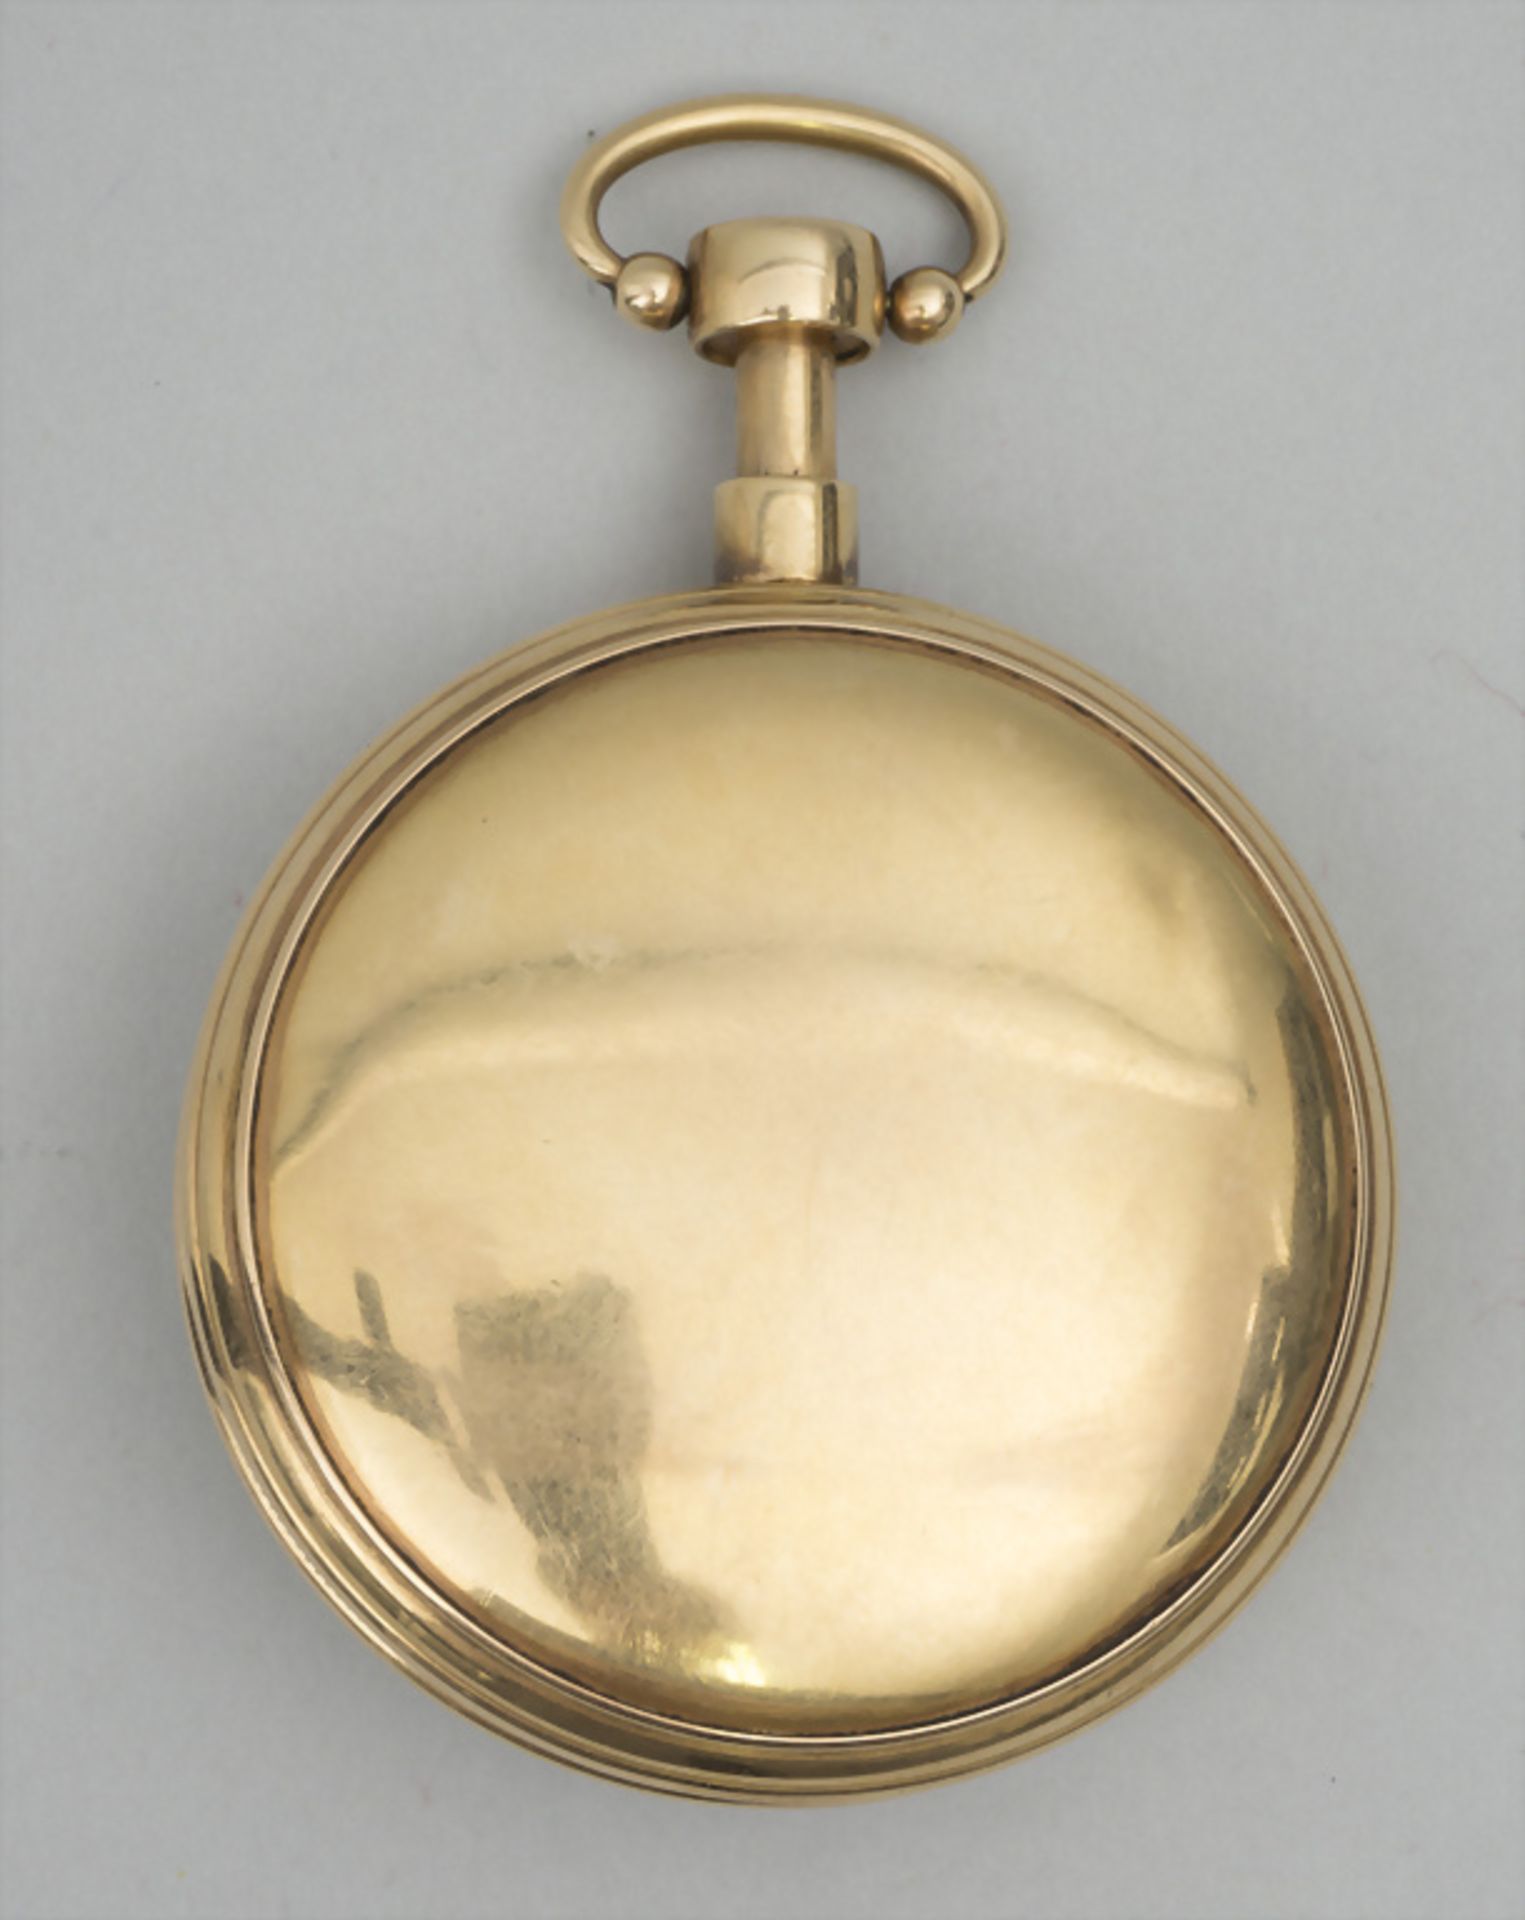 Offene Taschenuhr / An 18k gold open faced watch, Emile Moré à Geneve, Genf, um 1800 - Bild 5 aus 5